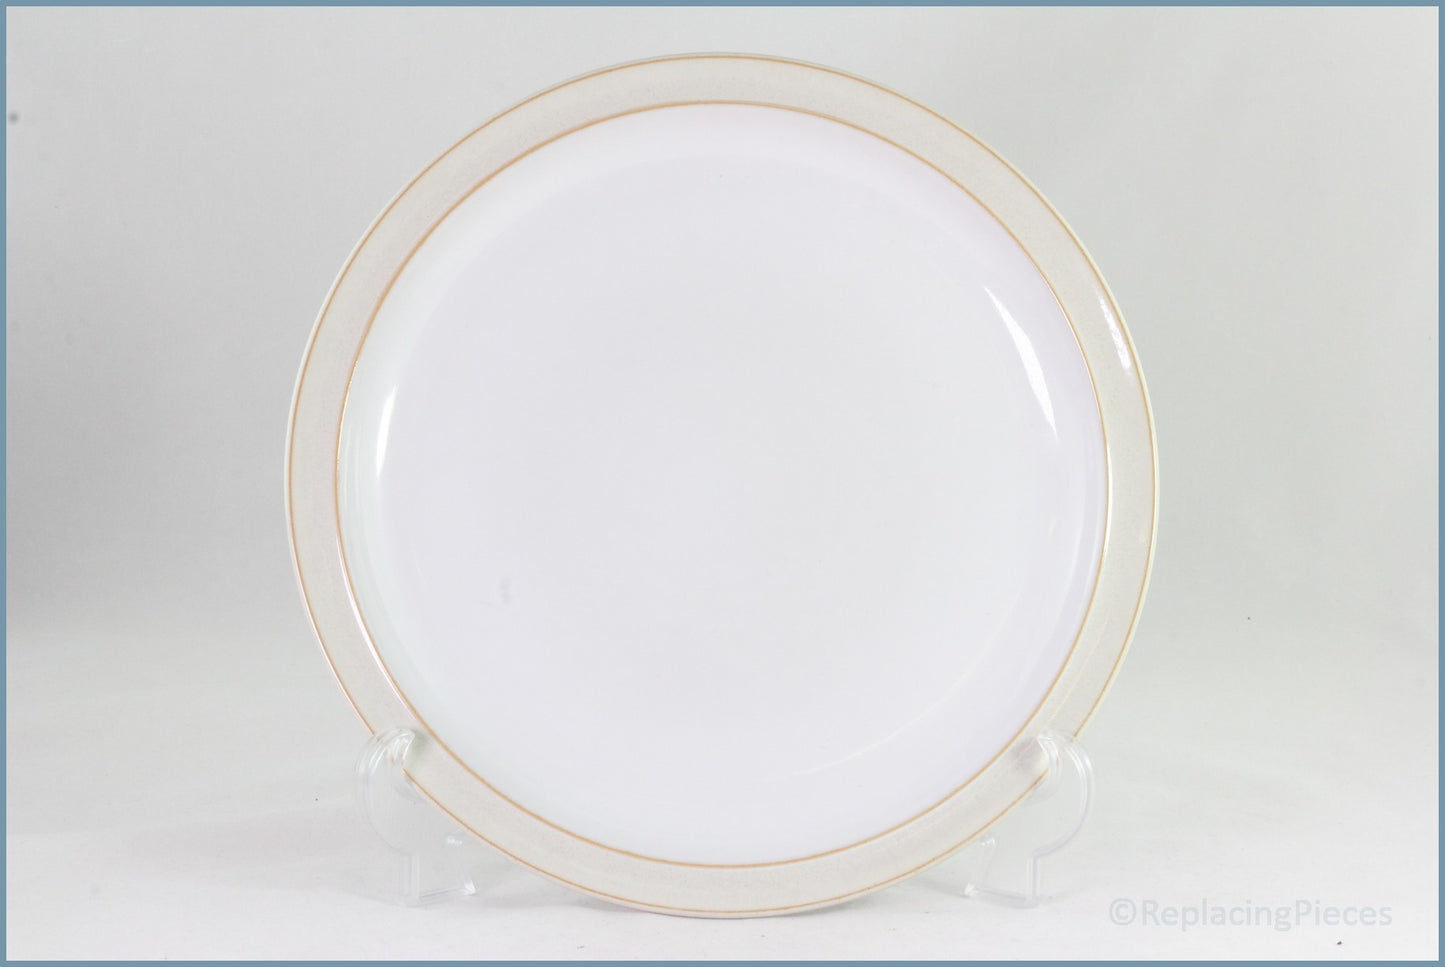 Denby - Linen - Dinner Plate